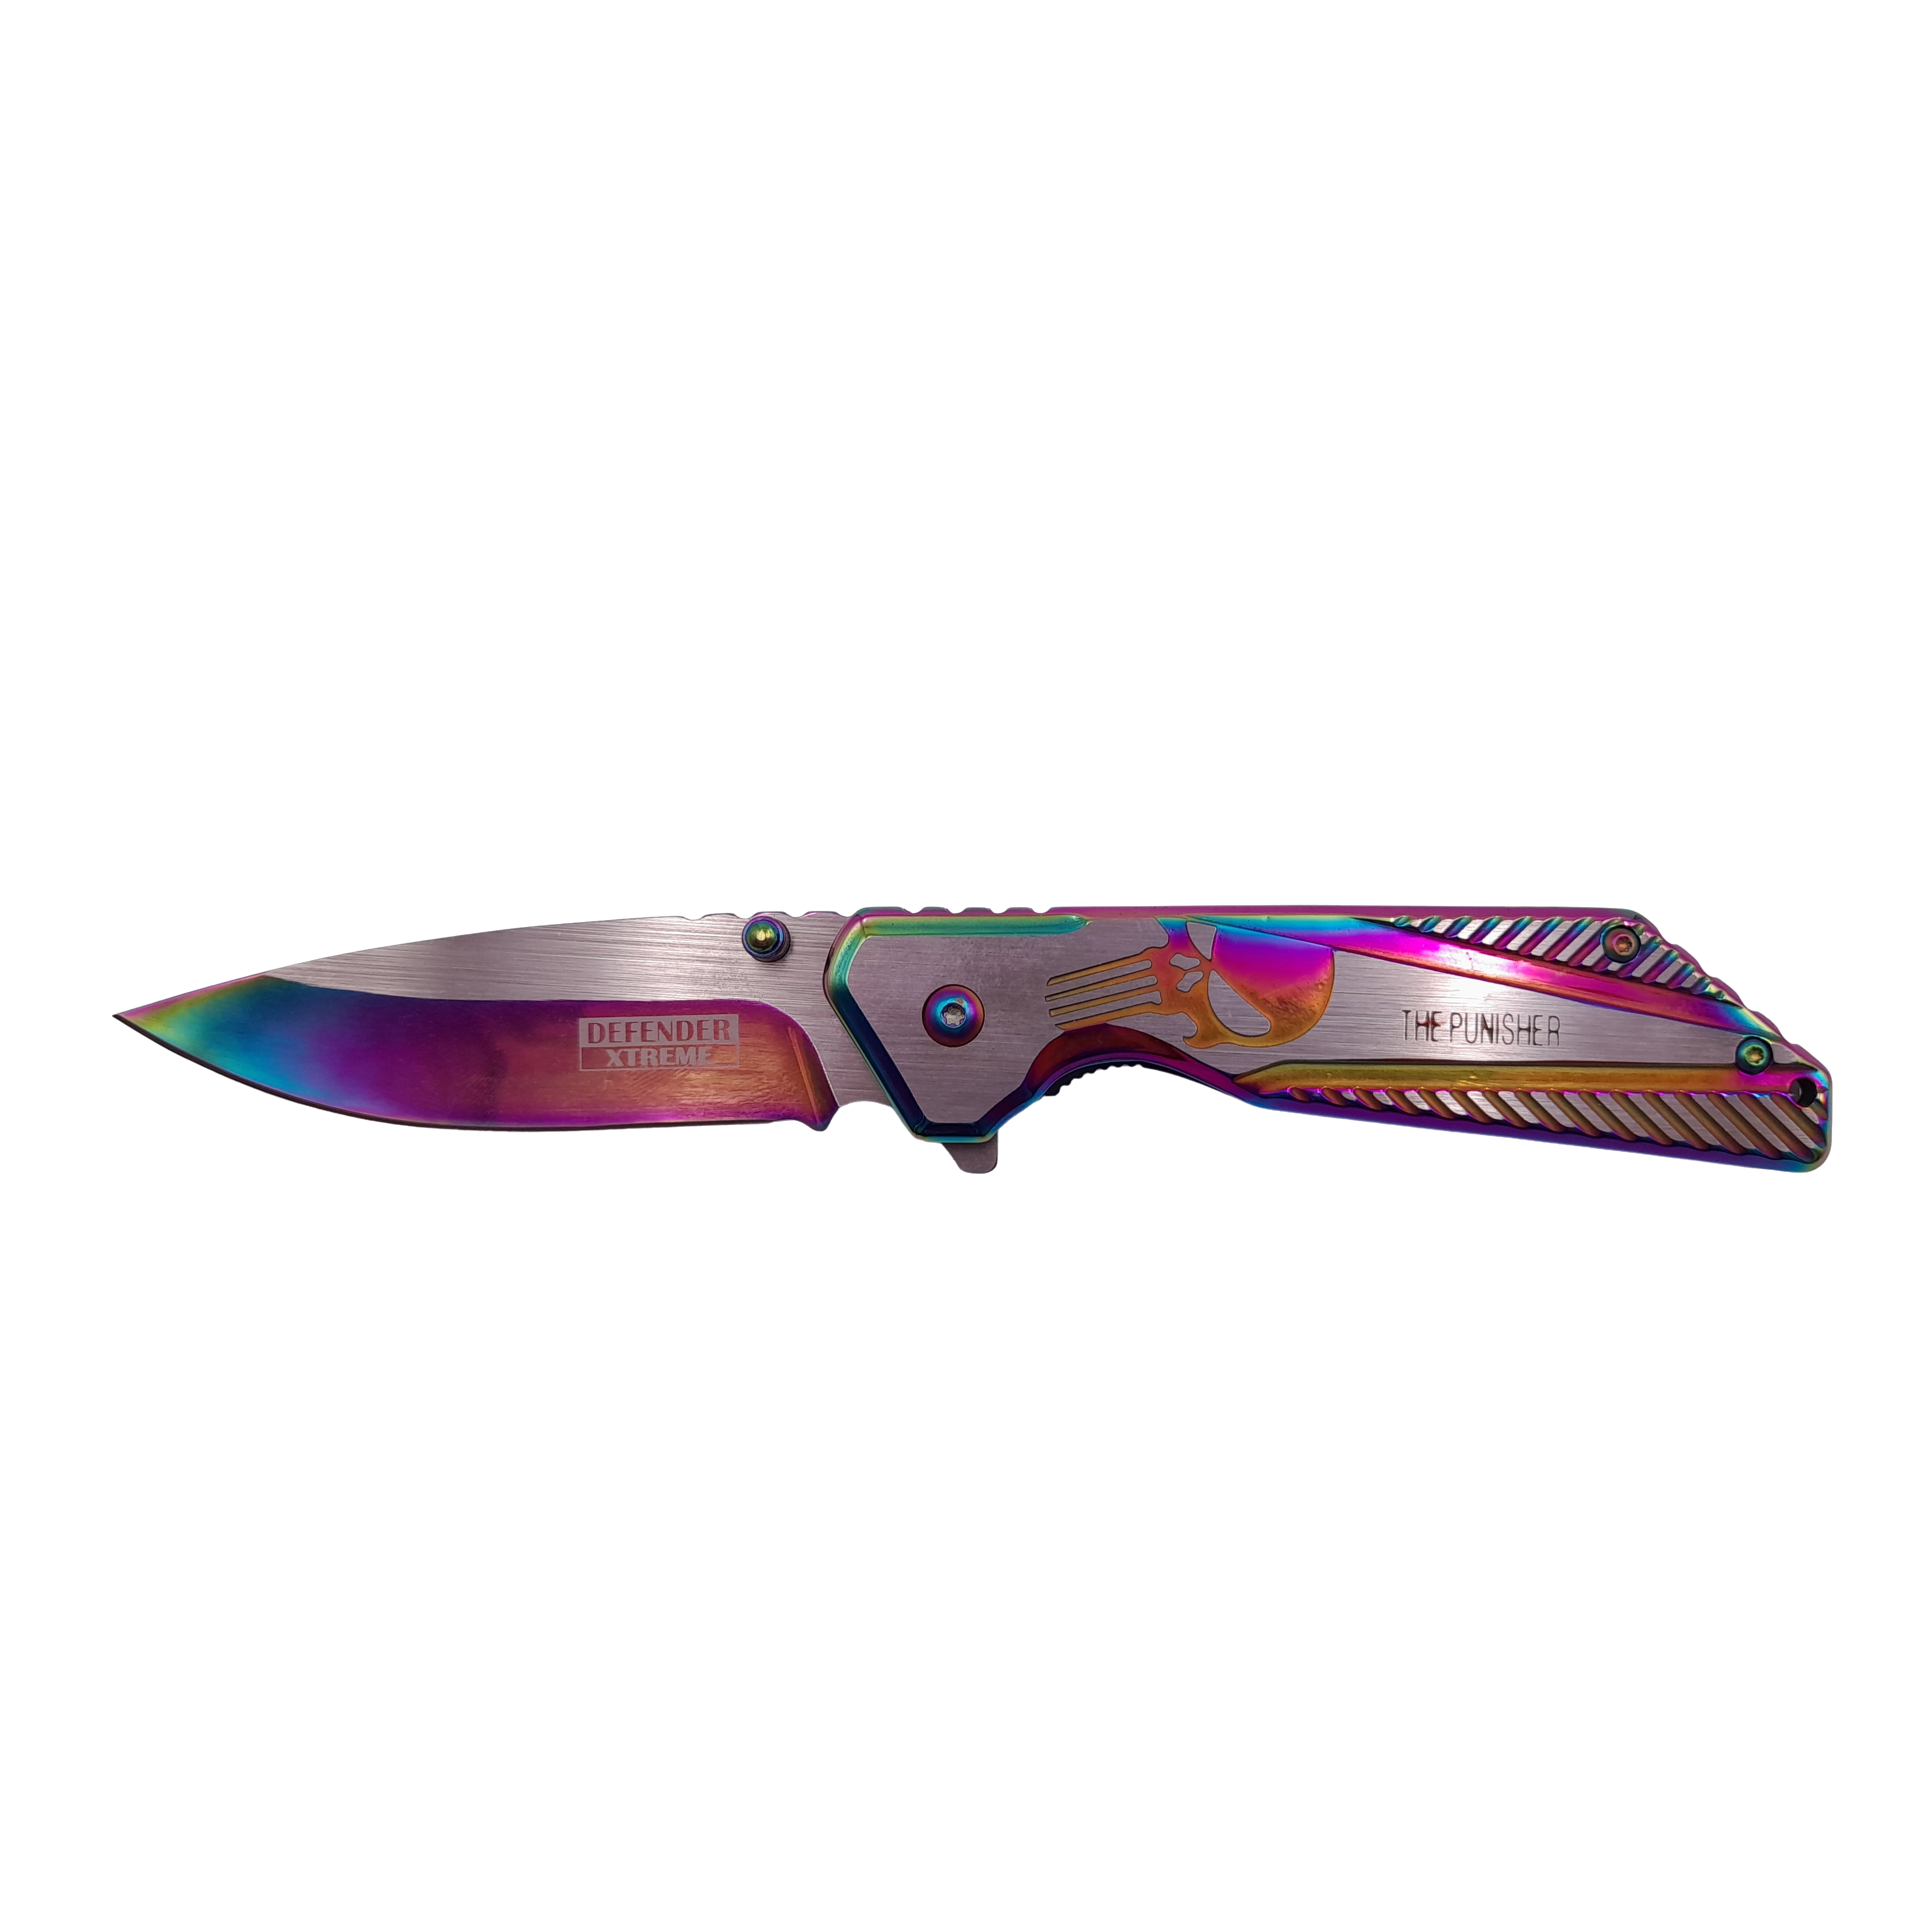 Briceag de vanatoare IdeallStore, Punisher Blade, 19.5 cm, multicolor